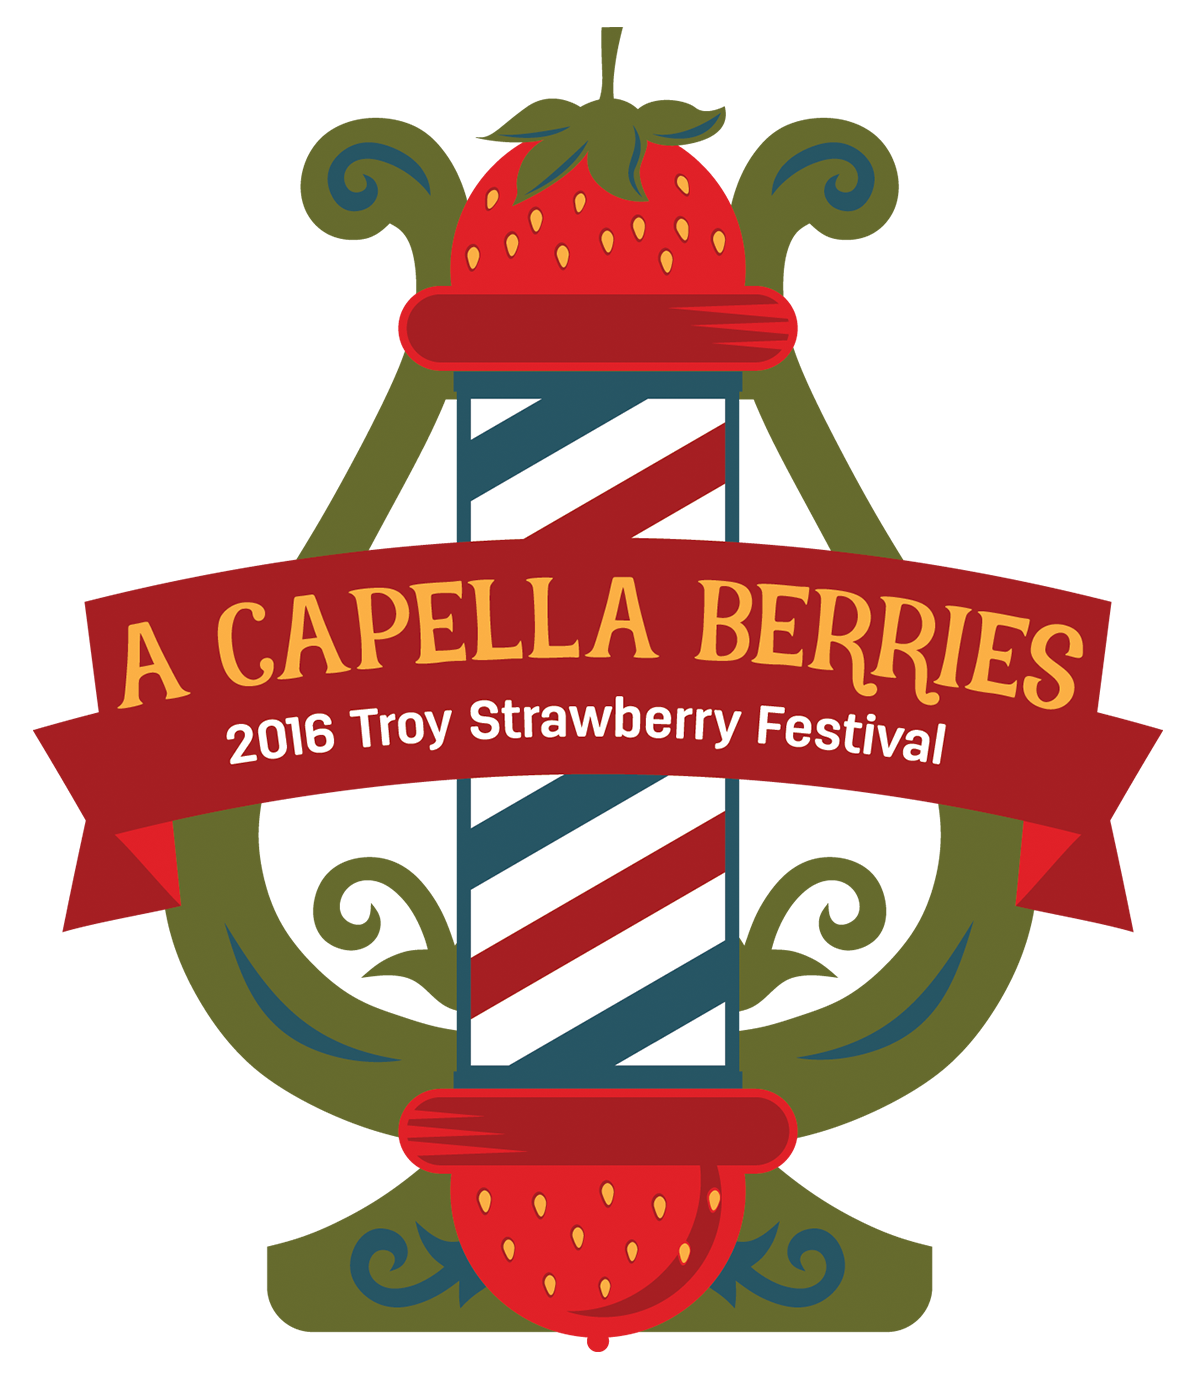 2016 Troy Strawberry Festival logo